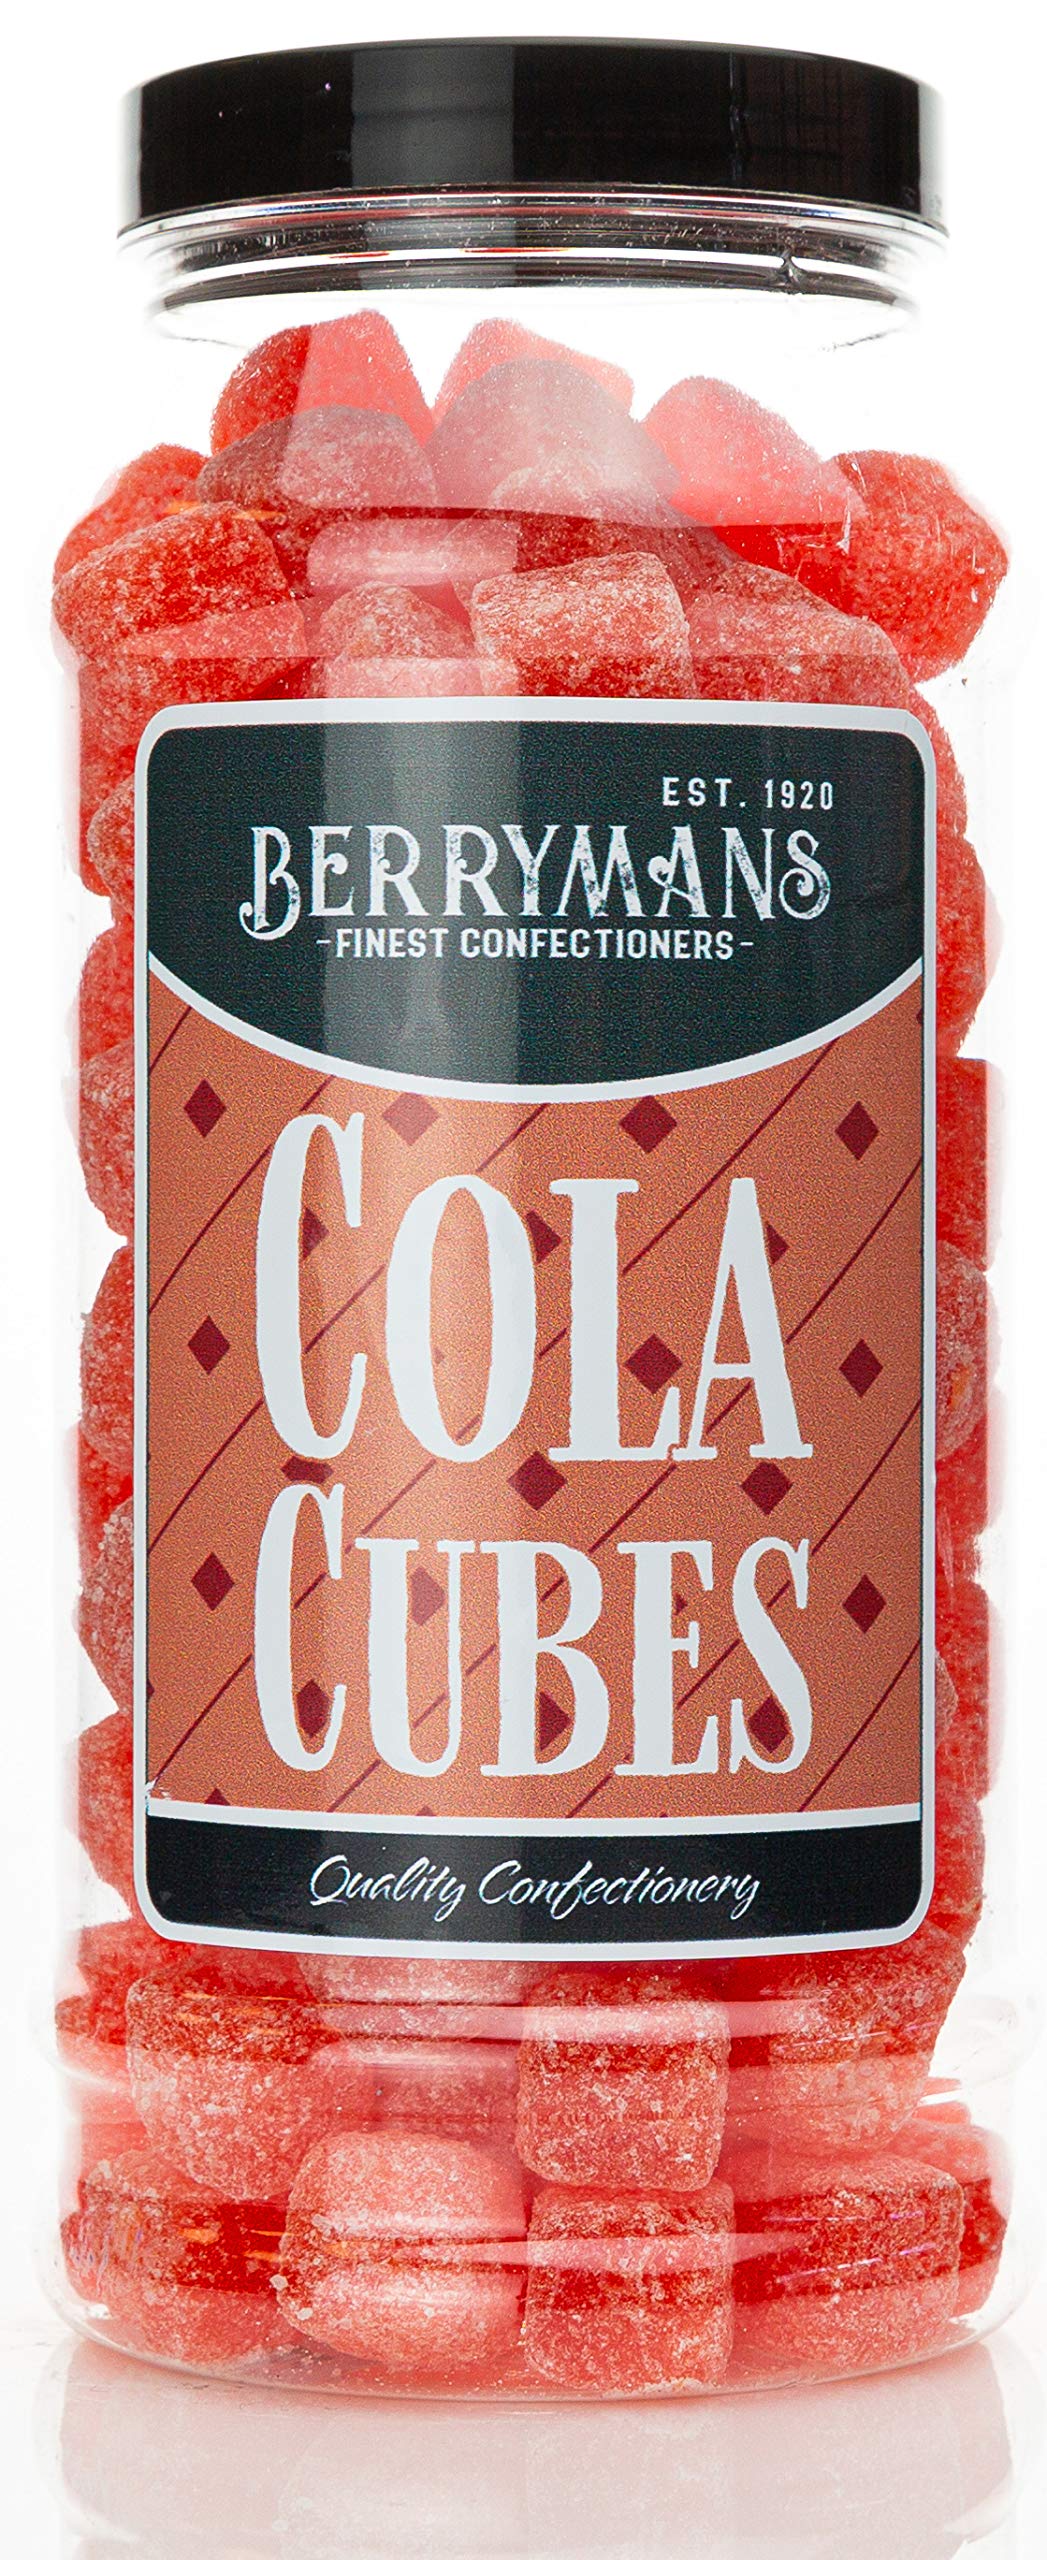 Original Cola Cubes Kola Retro Sweets Gift Jar By Berrymans Sweet Shop - Classic Sweets, Traditional Taste.